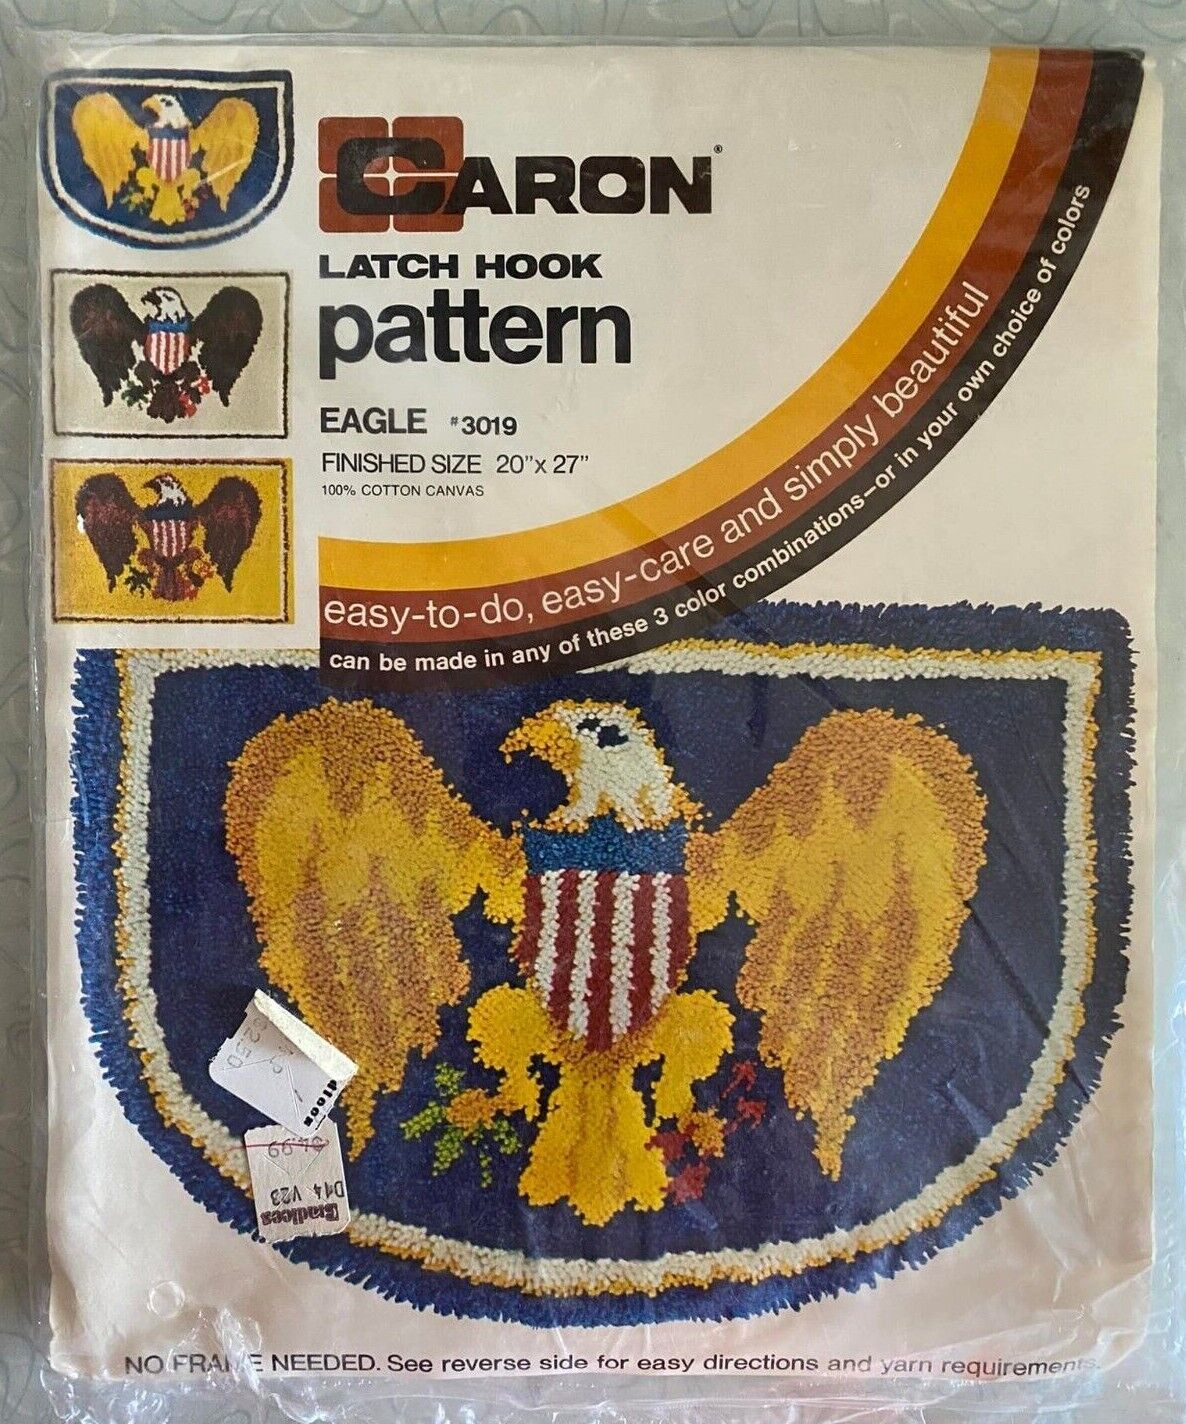 Latch Hook Pattern Canvas Eagle # 3019 Caron 20" X 27" Hearth Rug Or Rectangular